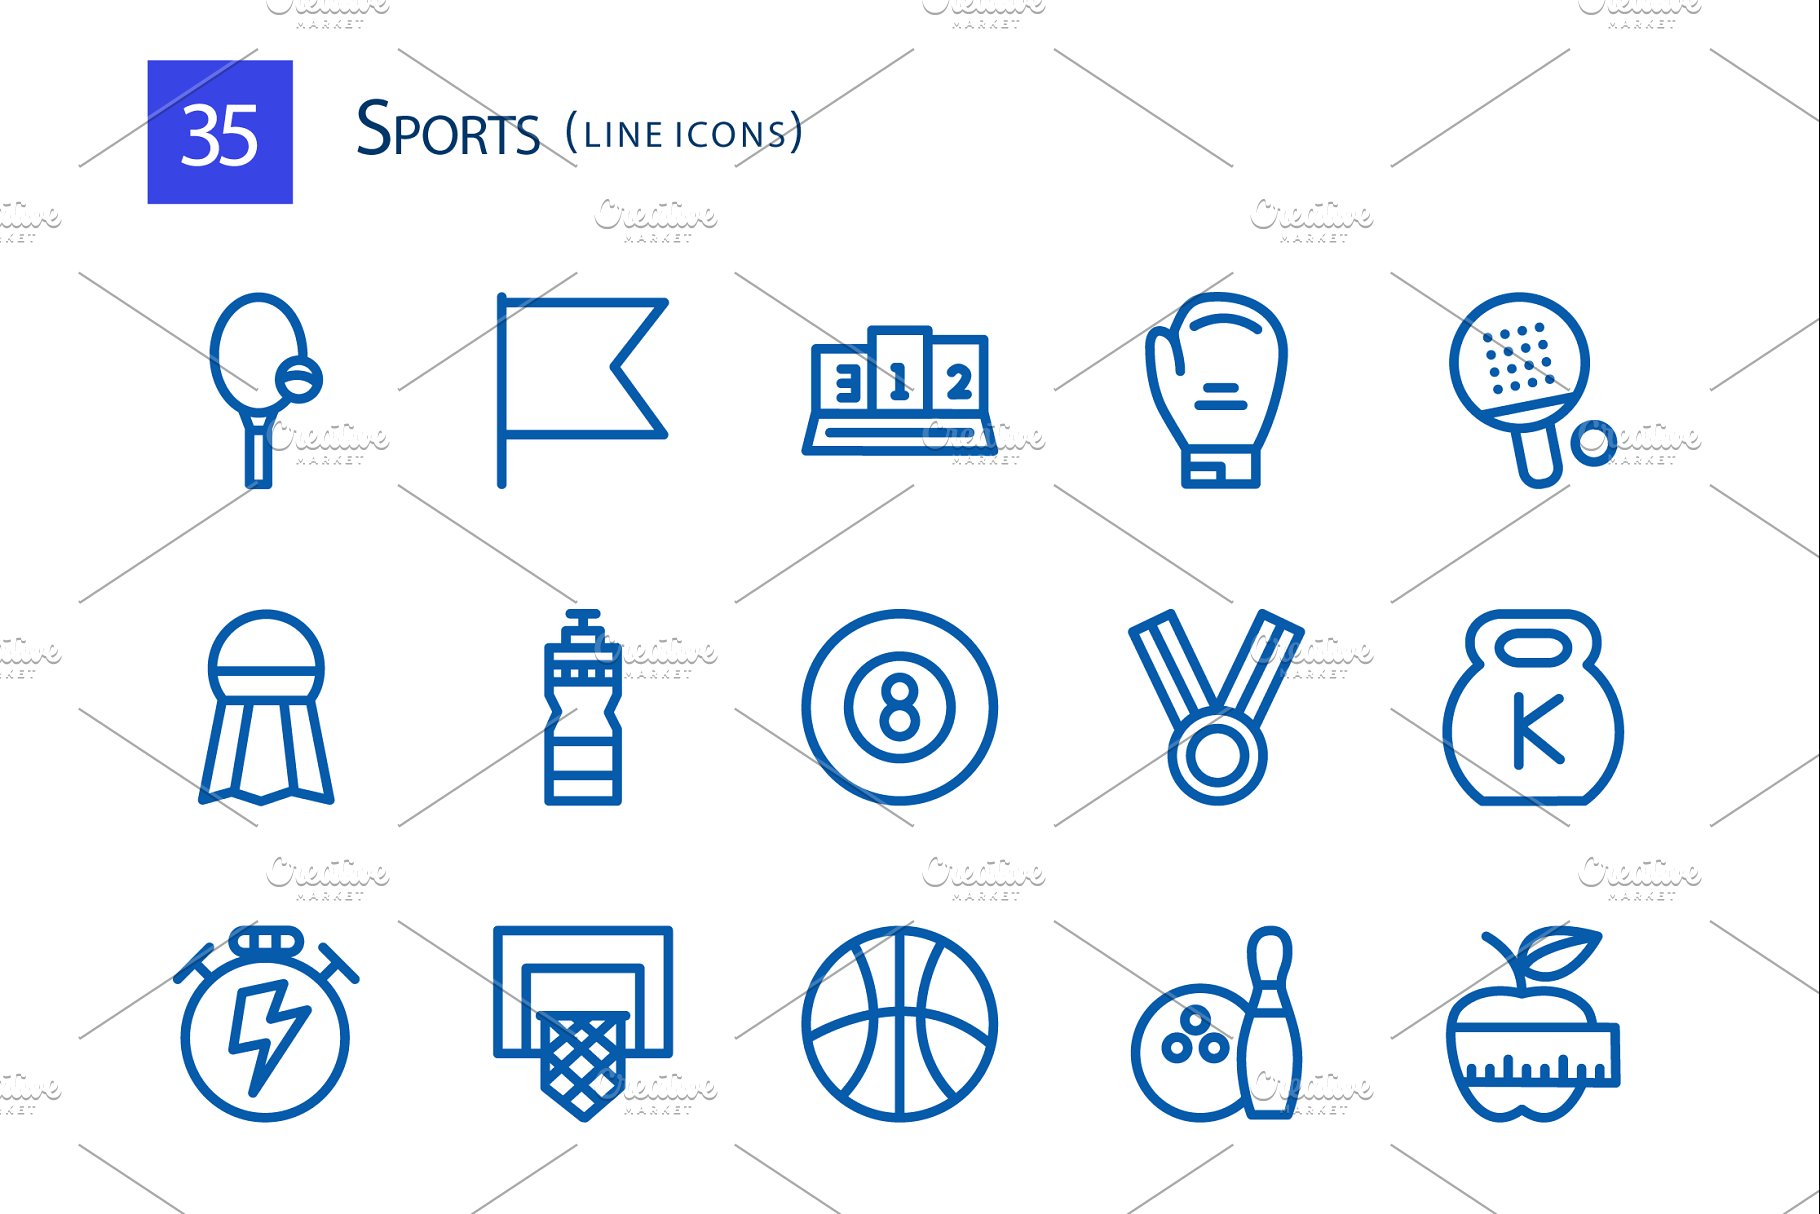 33个运动线型图标 33 Sports Line Icons